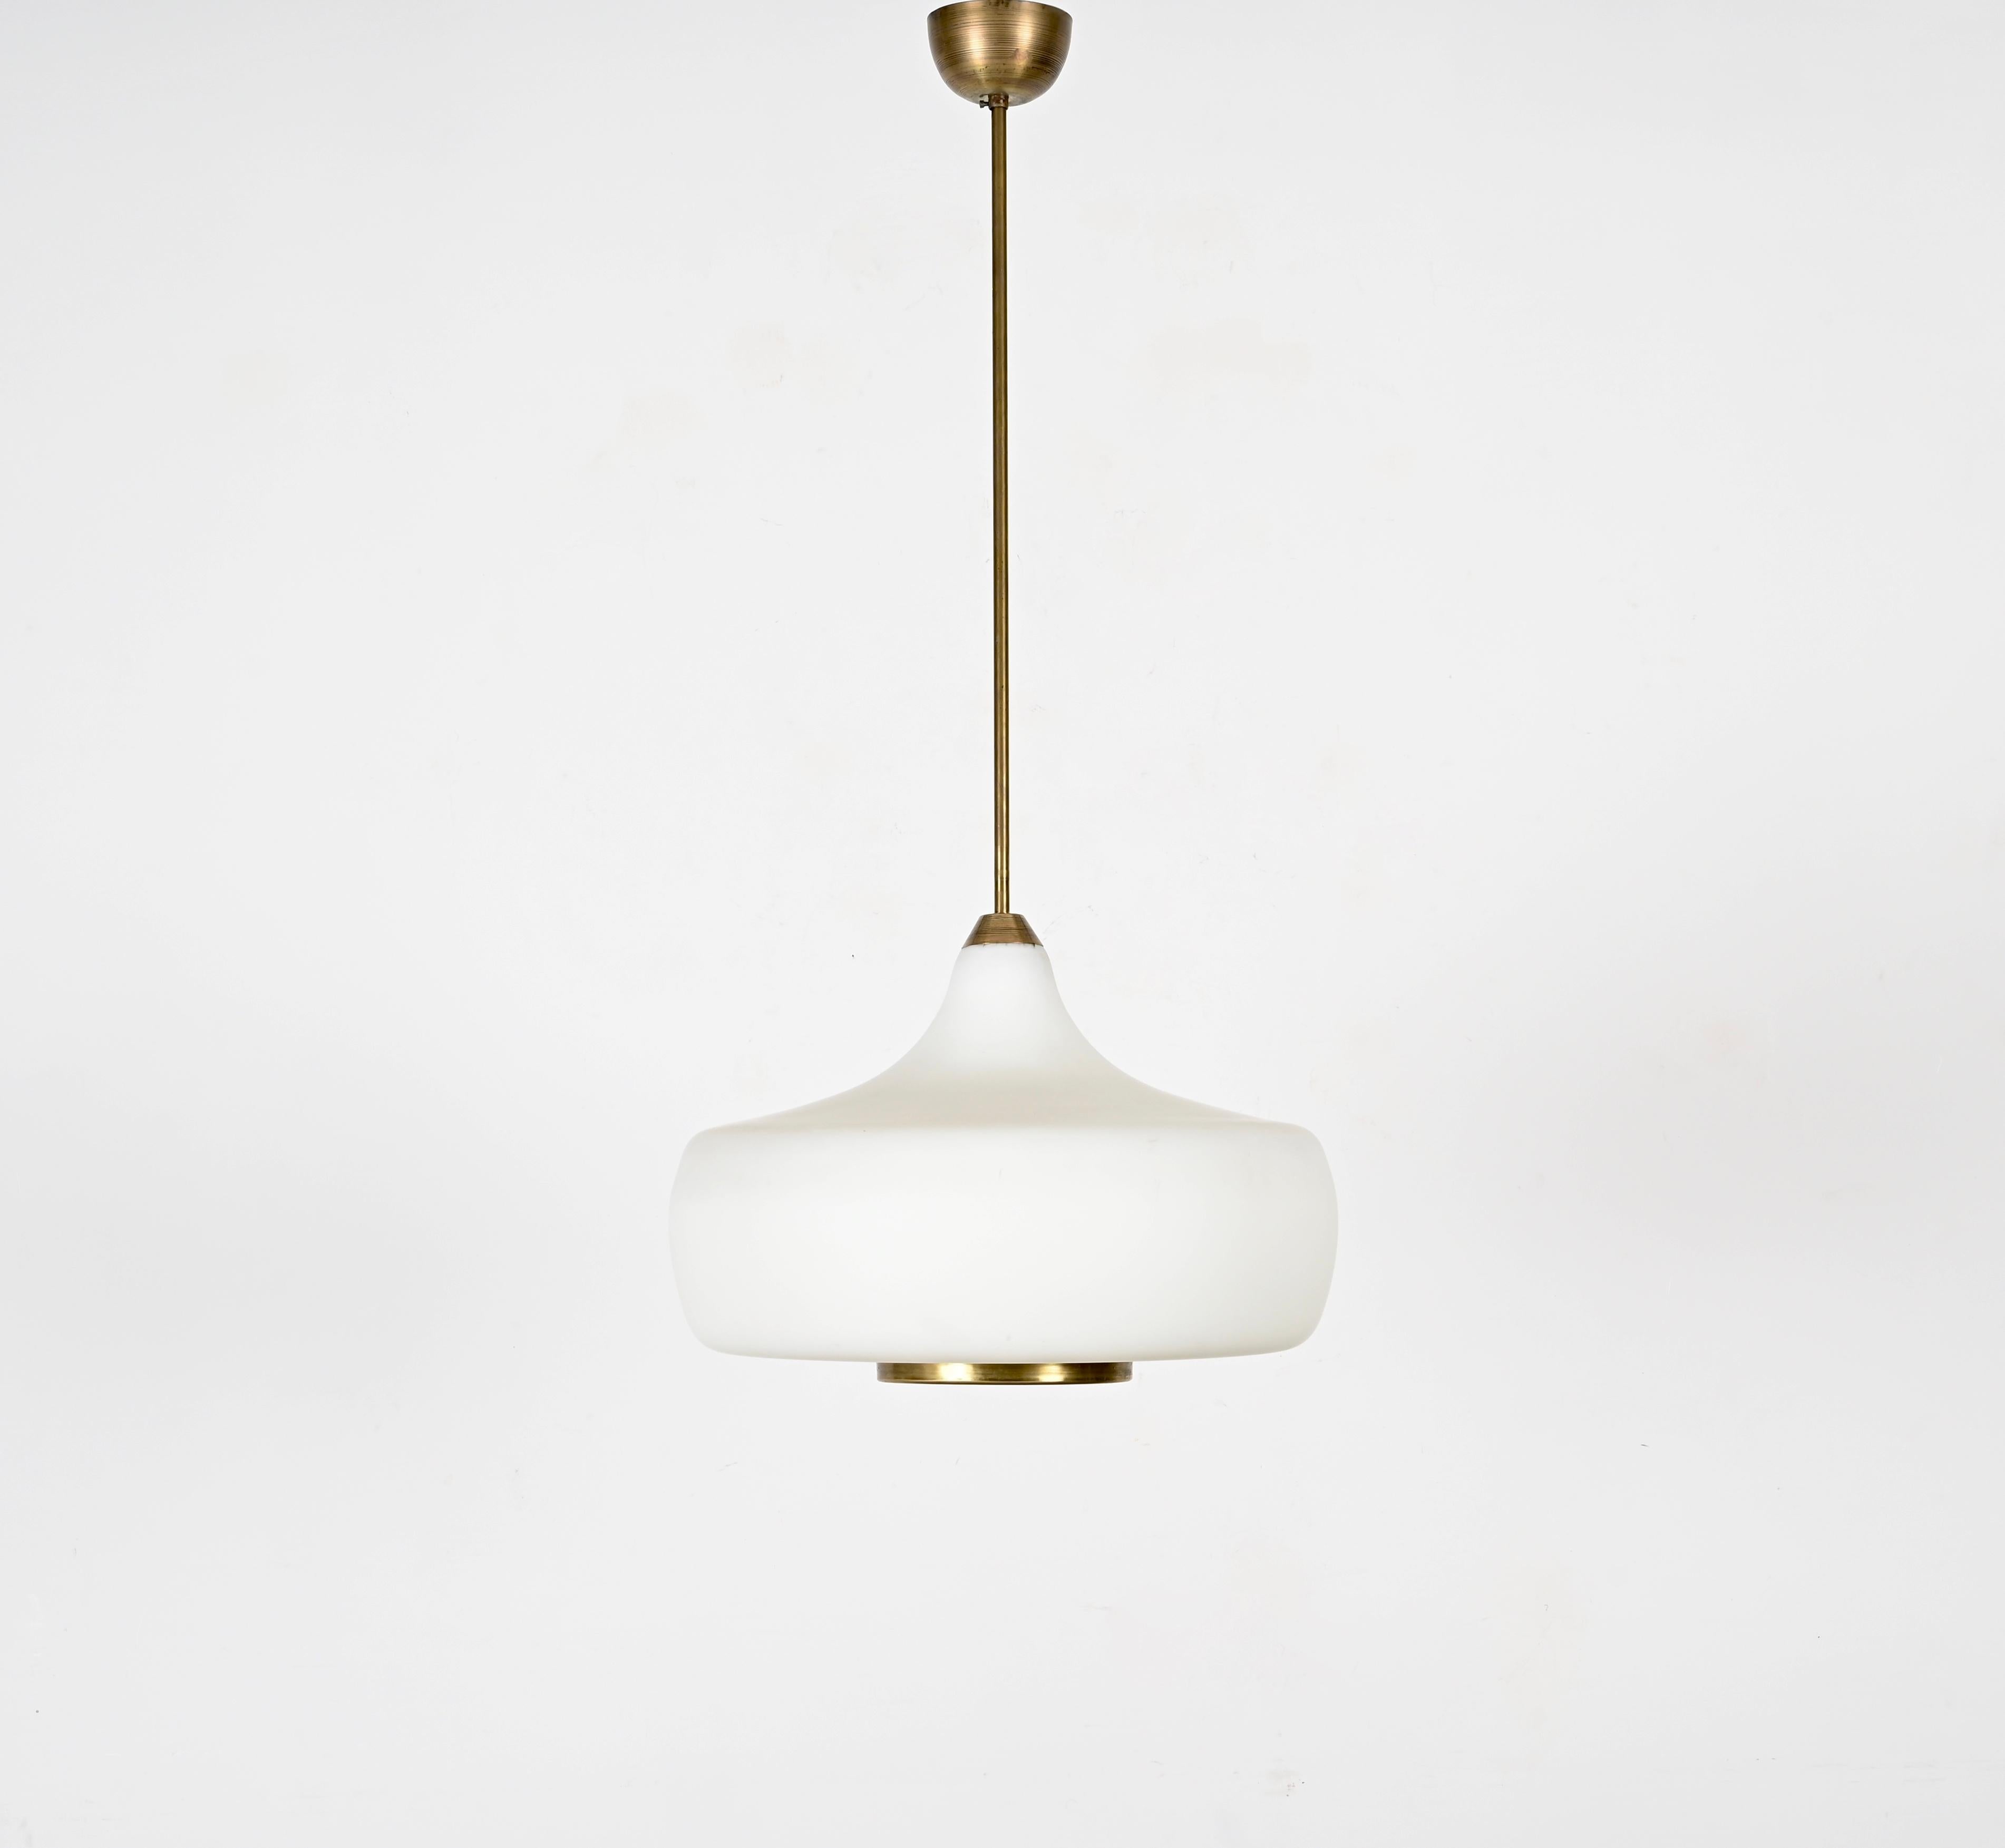 20th Century Stilnovo Opal Glass and Brass Chandelier Ceiling Lamp, Italian Lighting 1960s For Sale